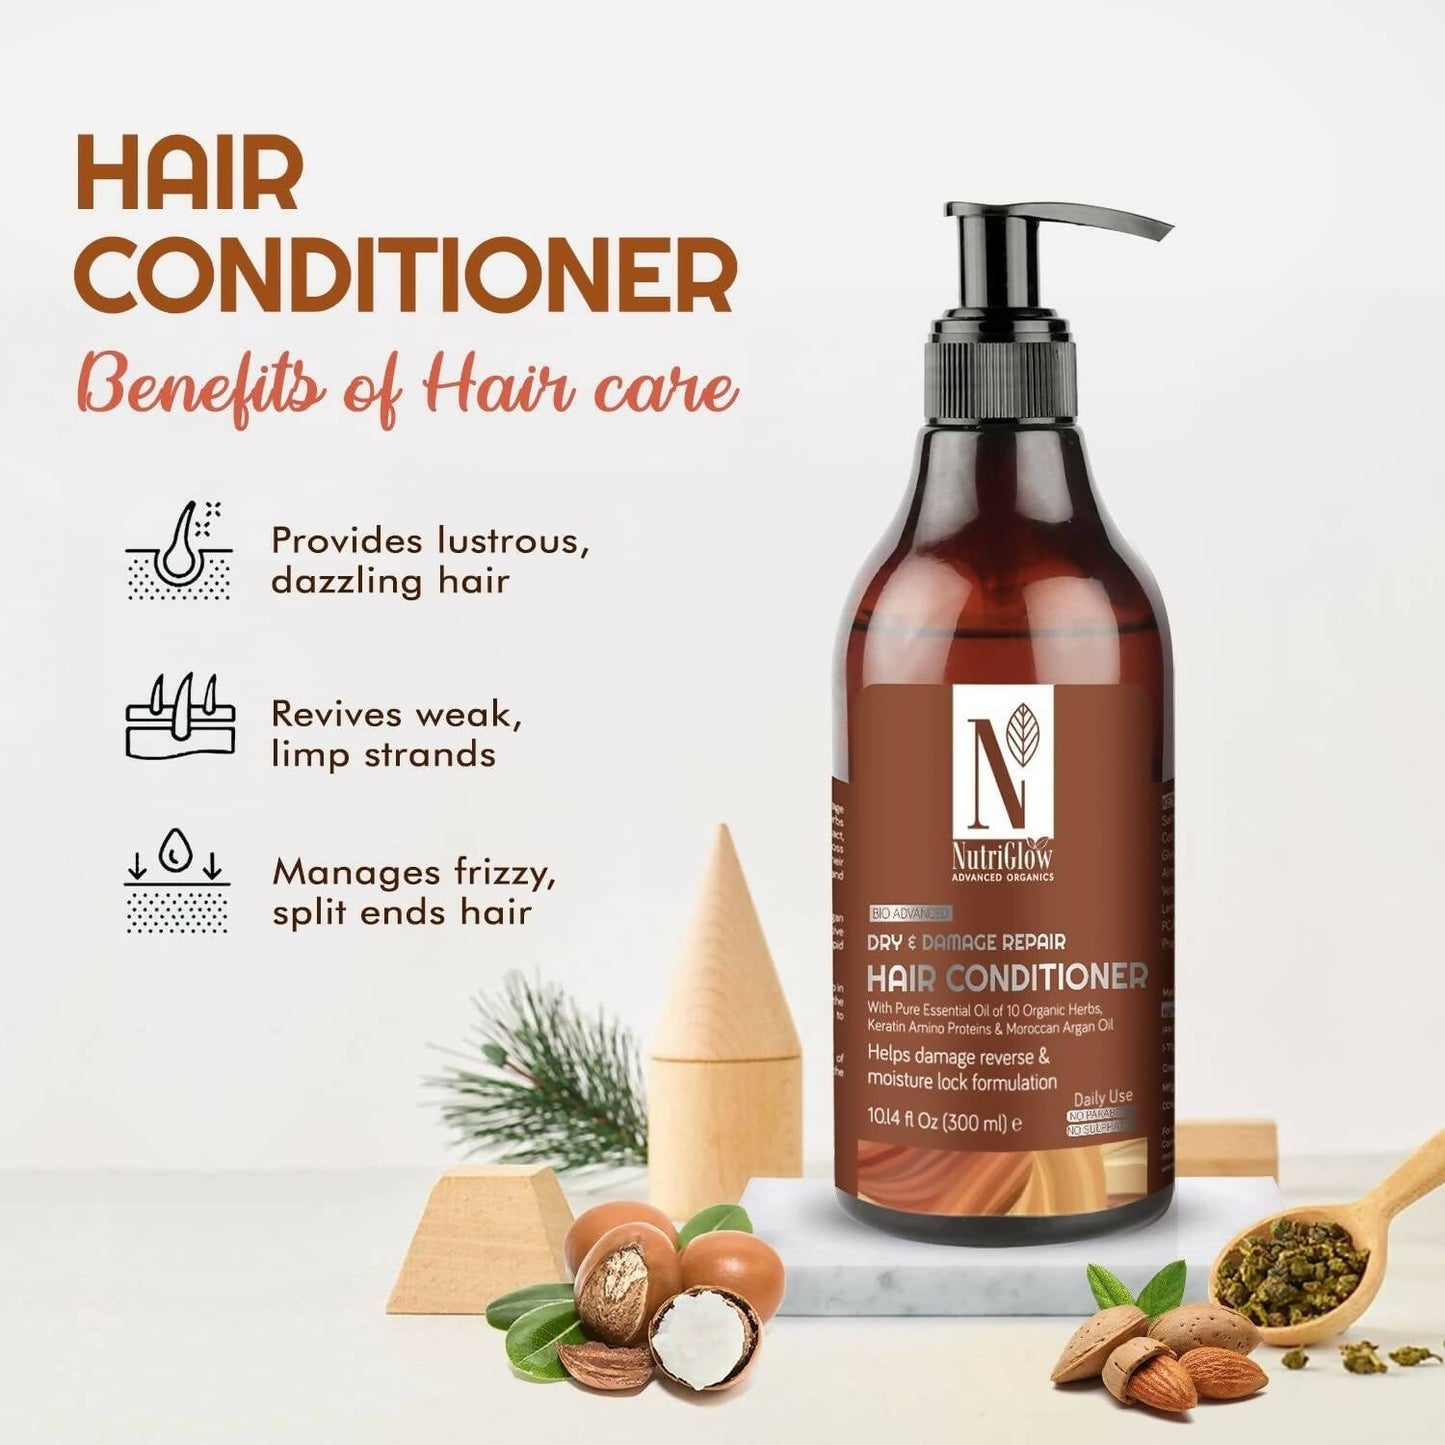 NutriGlow Advanced Organics Bio Advanced Daily Use Dry and Damage Repair Hair Conditioner